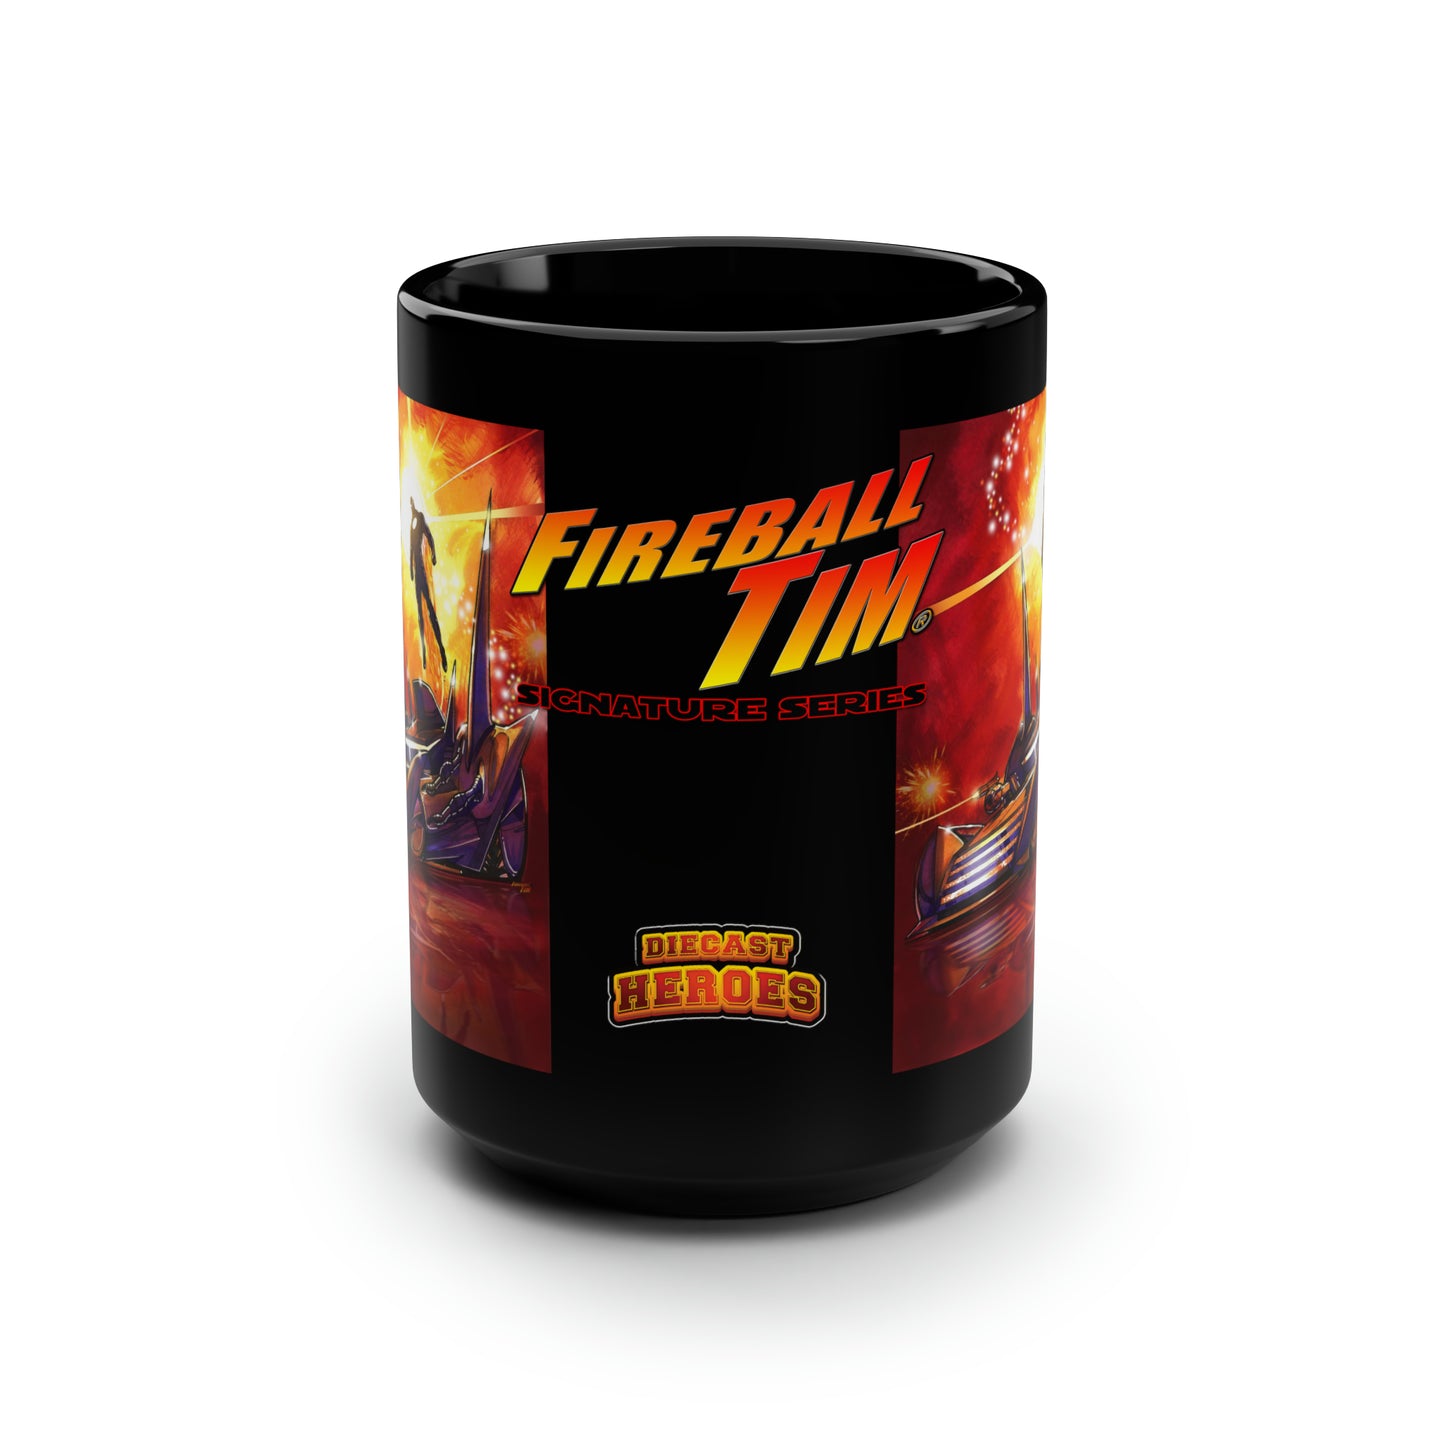 Fireball Tim Signature Series HOT SPOT Diecast Heroes Cover #9 Black Mug, 15oz, Hot Wheels, Johnny Lightning, Diecast Cars, Matchbox